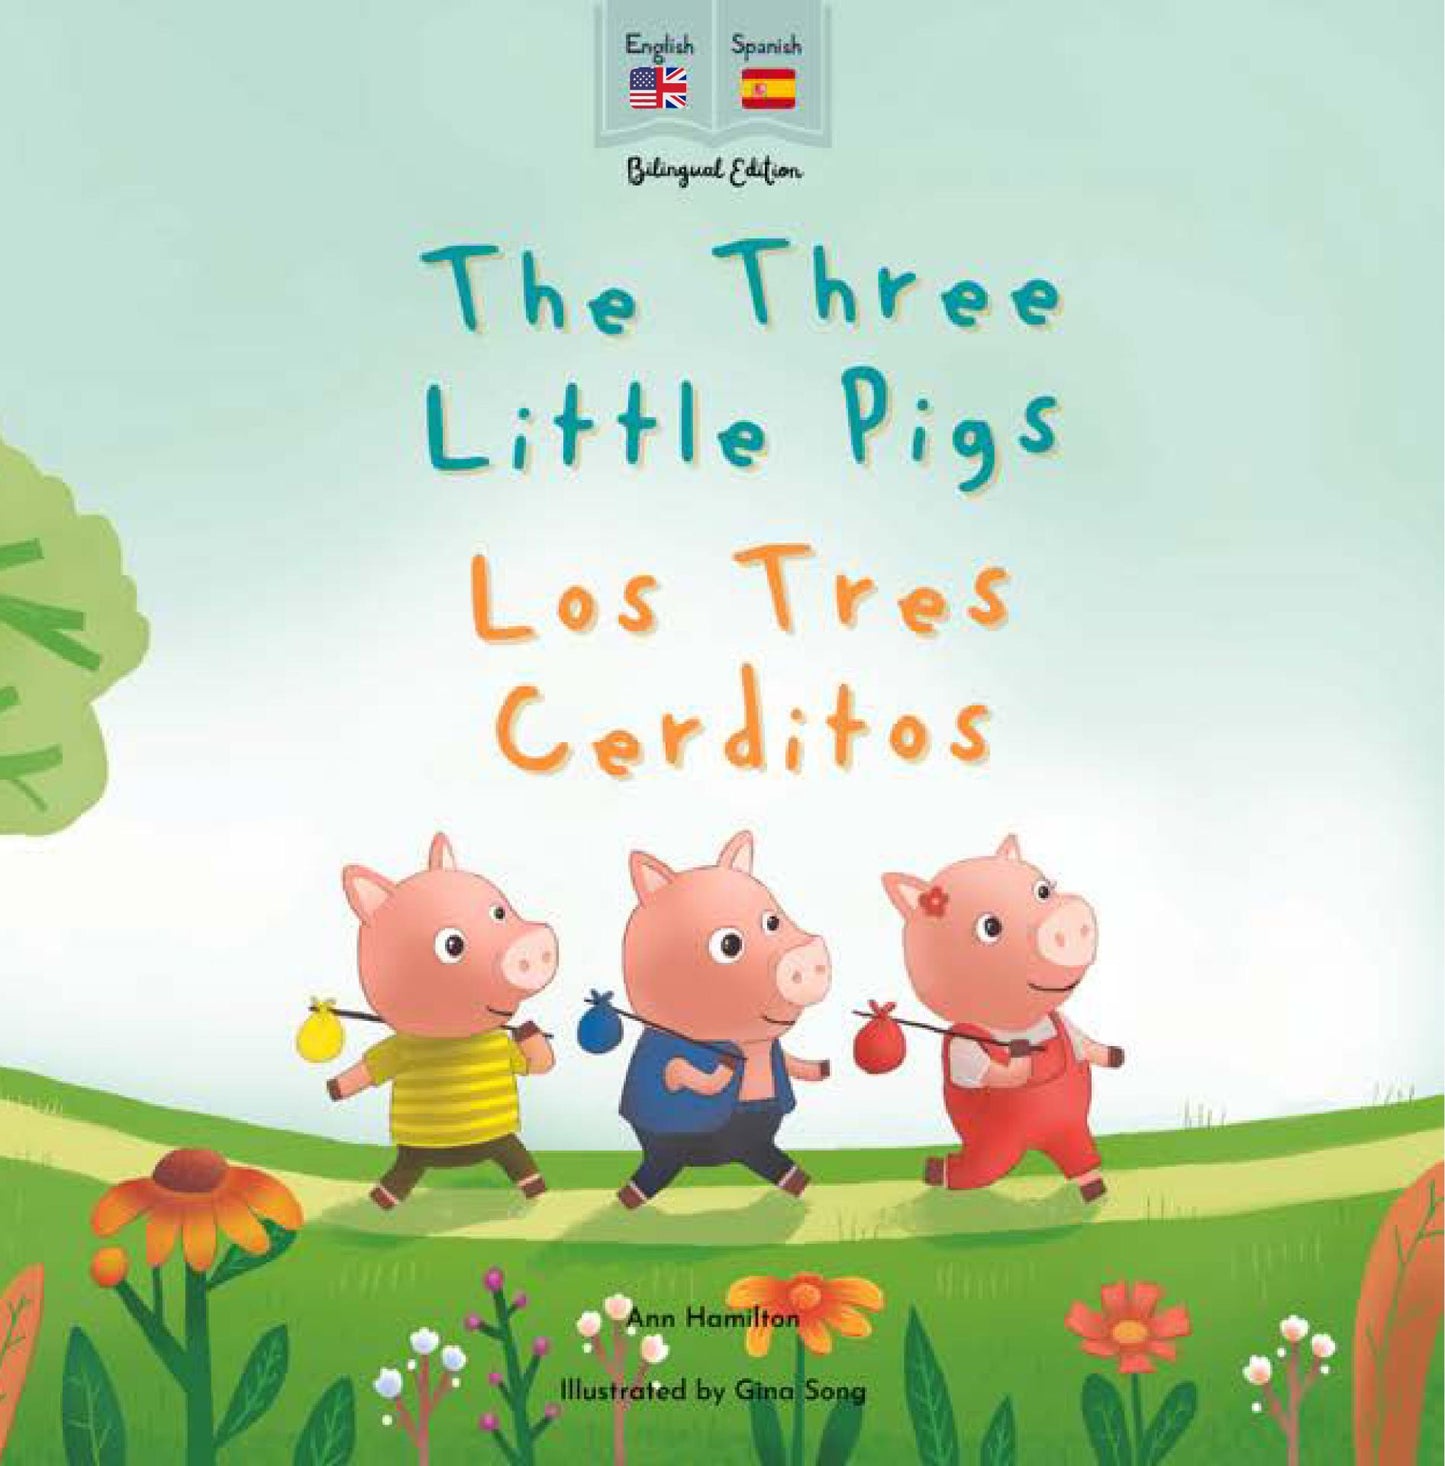 The Three Little Pigs - Los Tres Cerditos: Bilingual Spanish - English edition